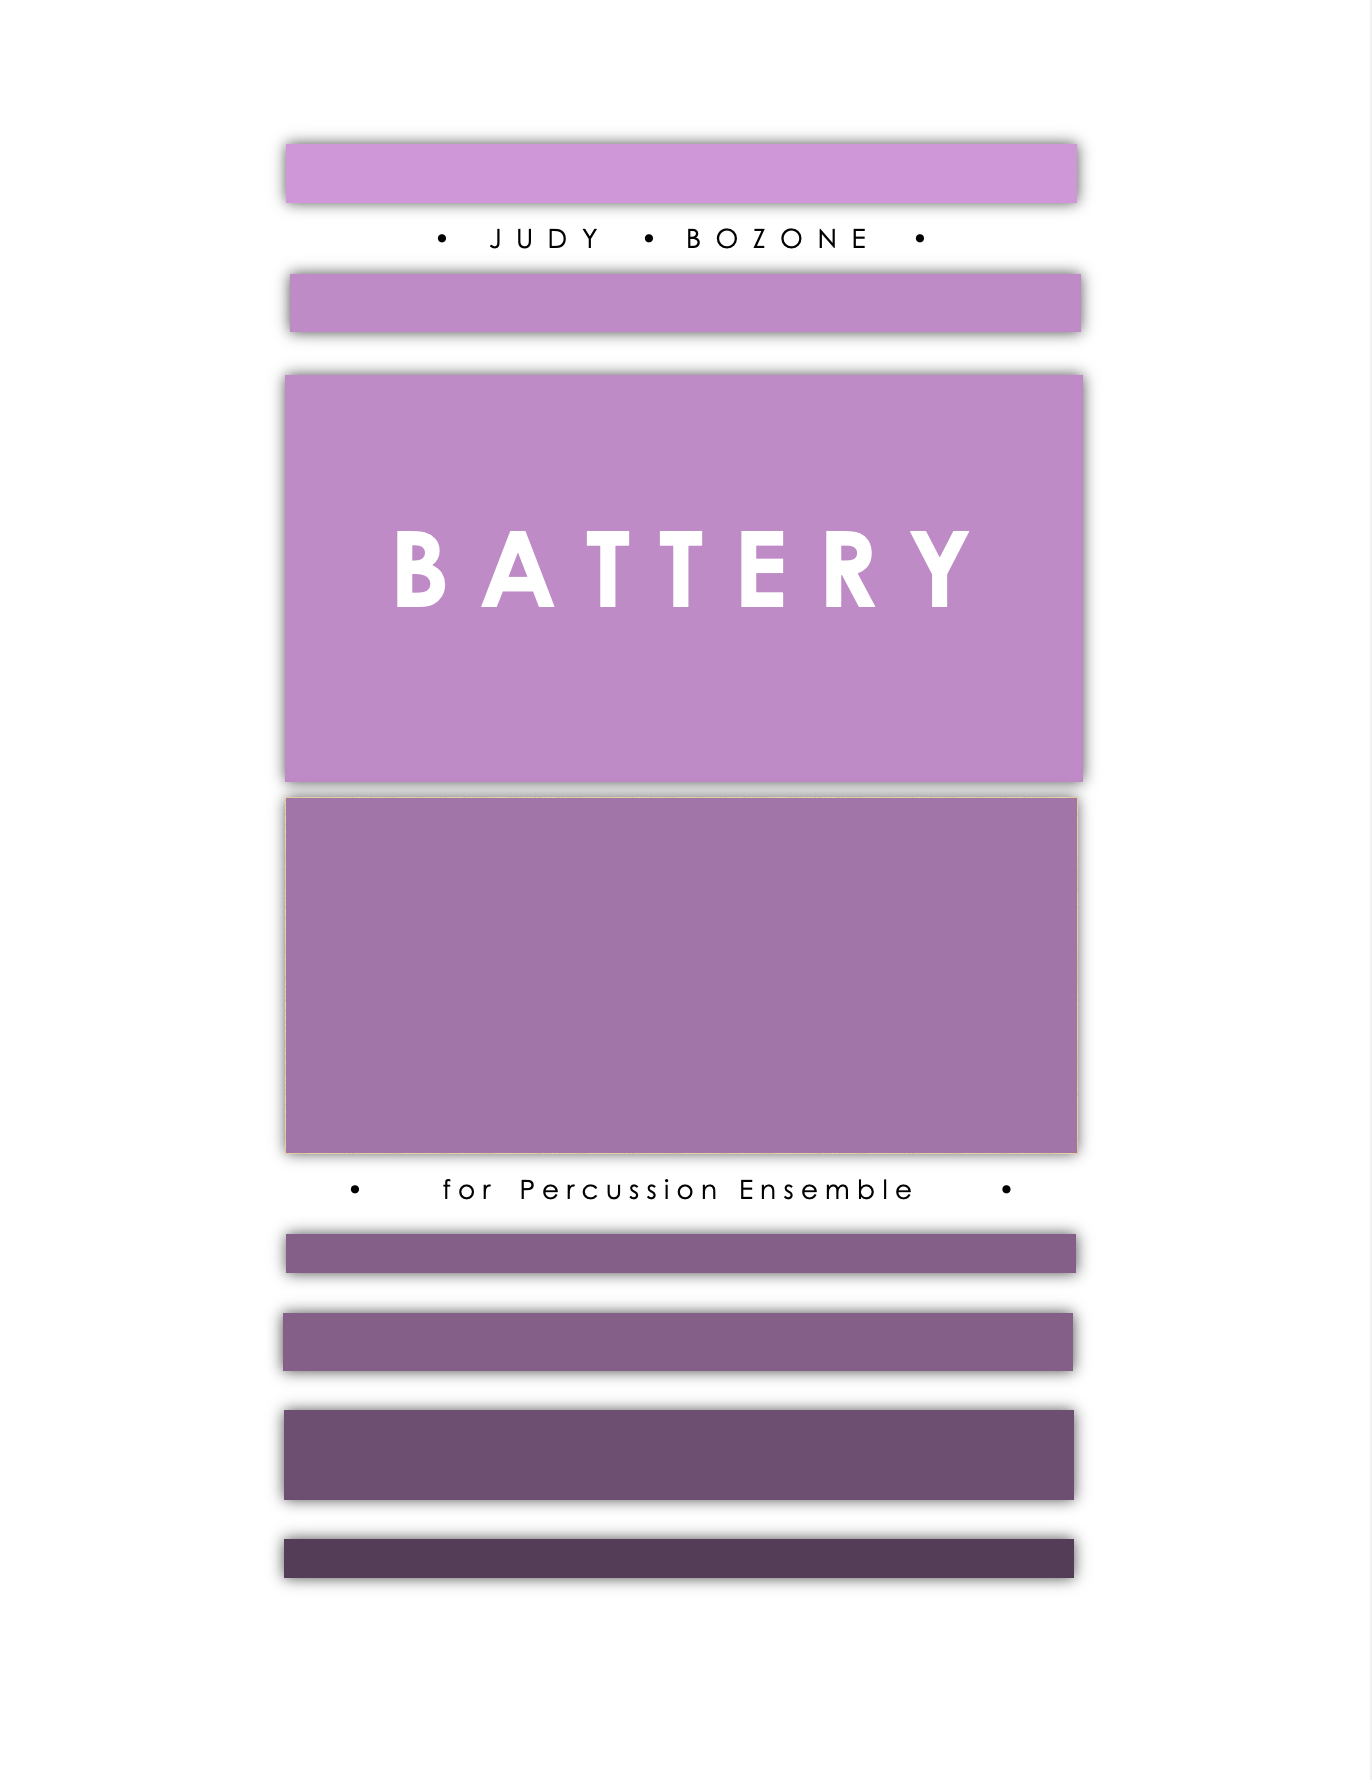 Battery by Judy Bozone